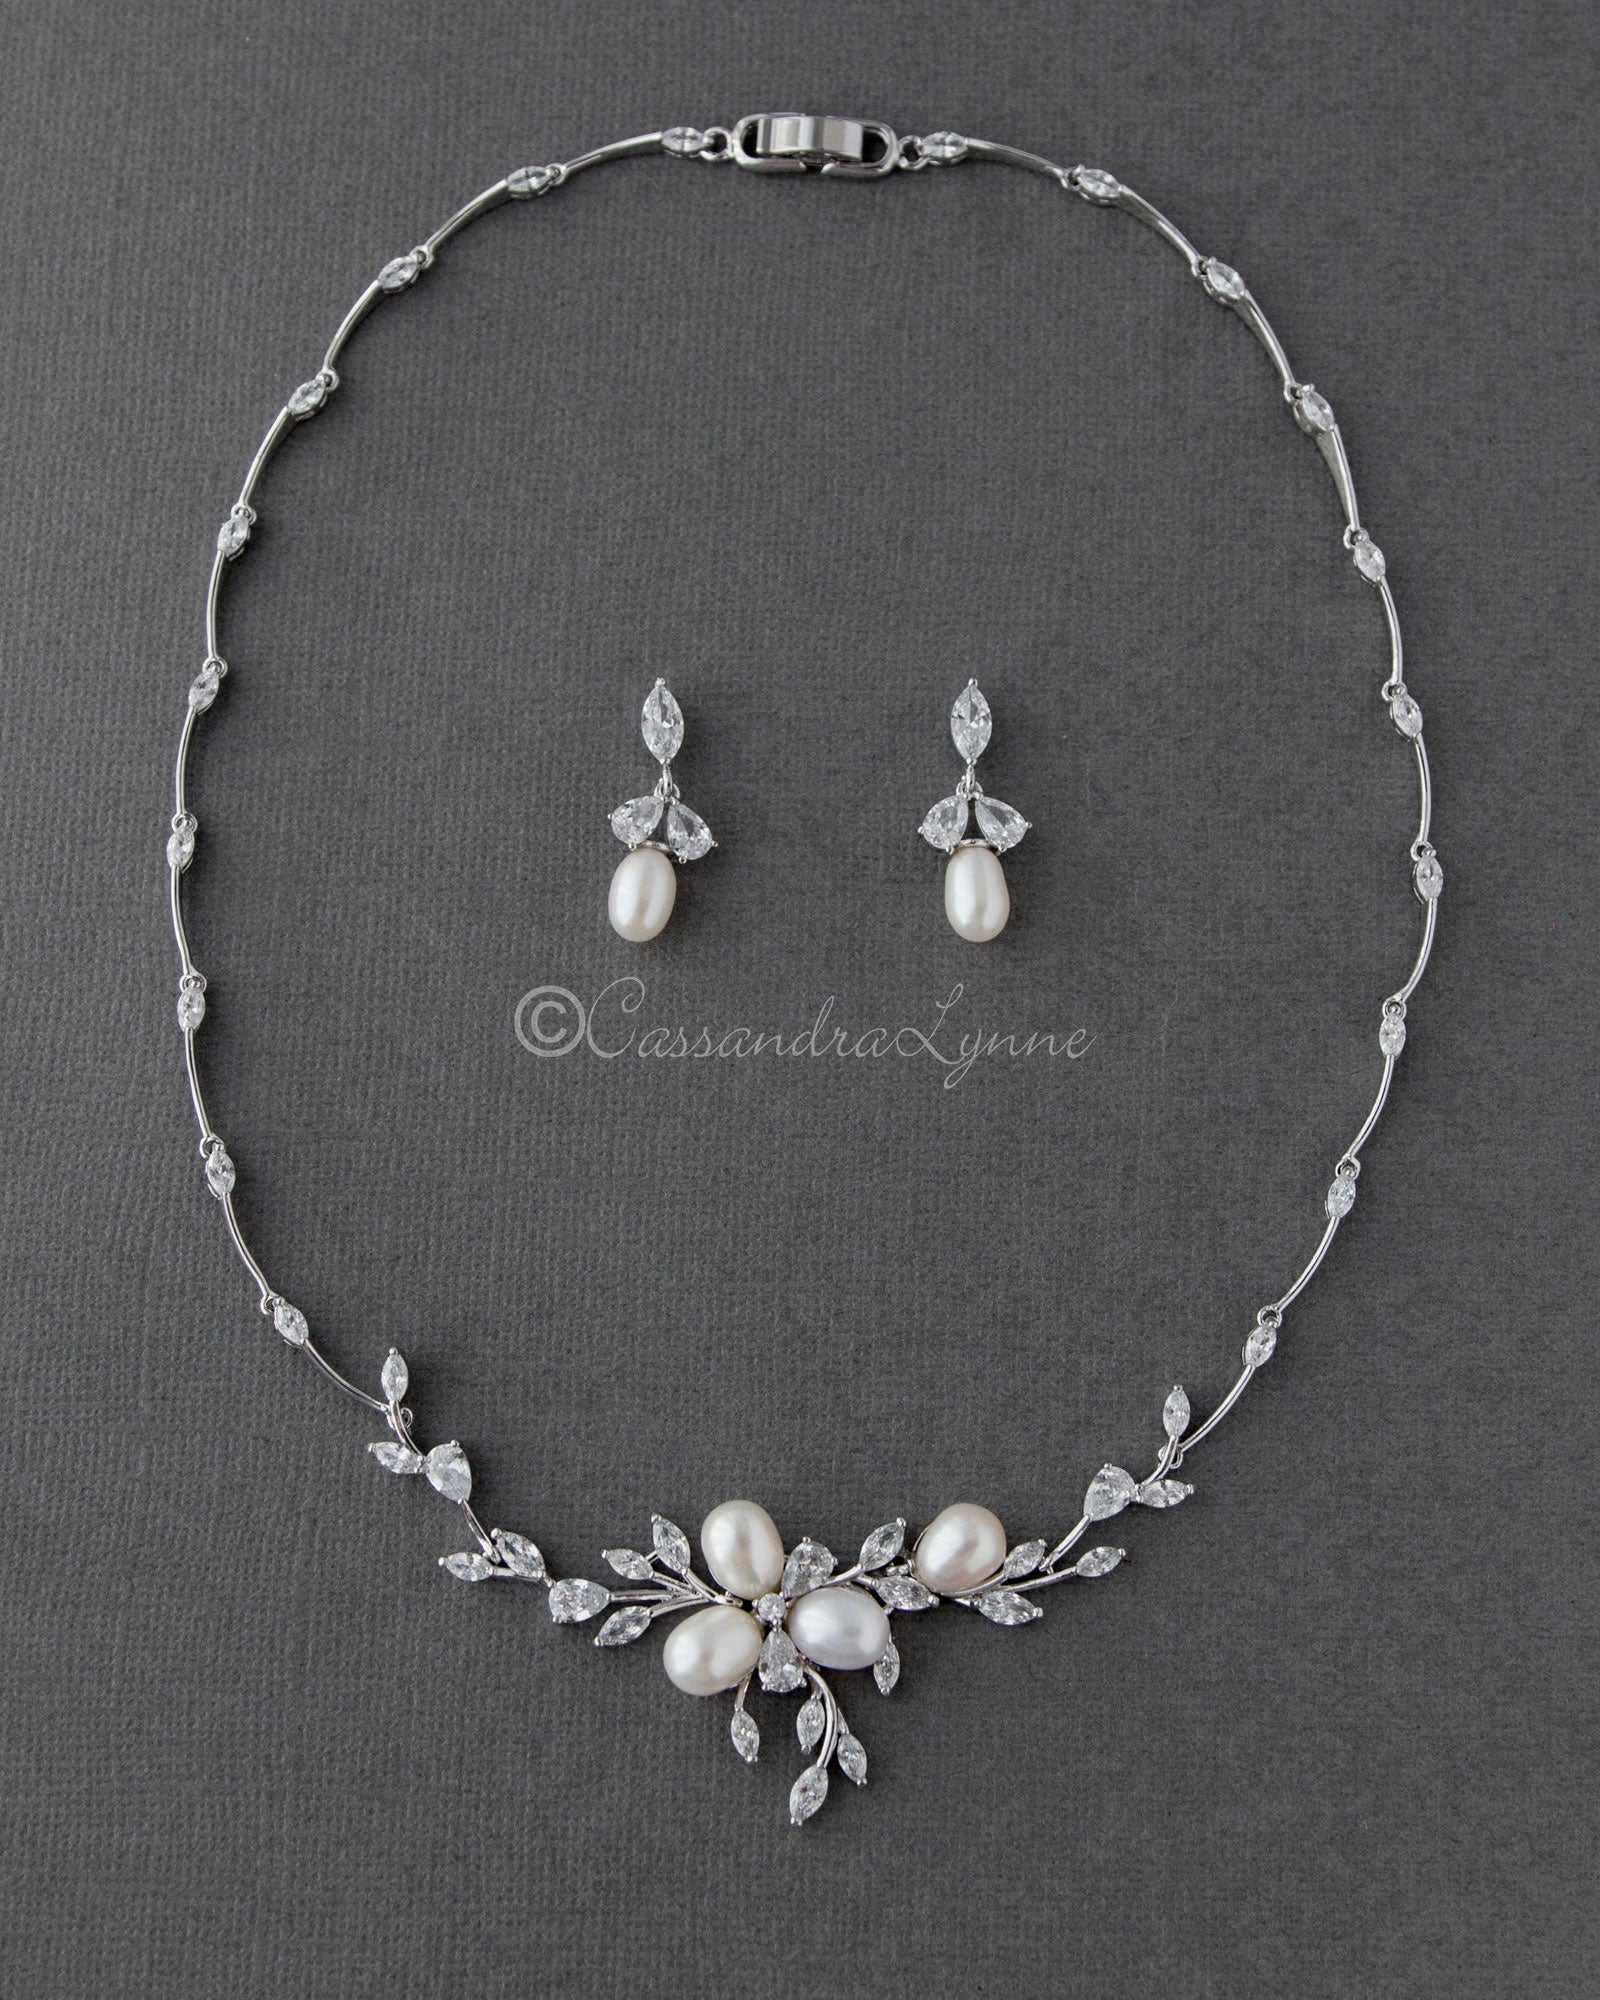 Order Stainless Steel necklace flower | KAYA Jewelry - KAYA jewels webshop  - a beautiful memory